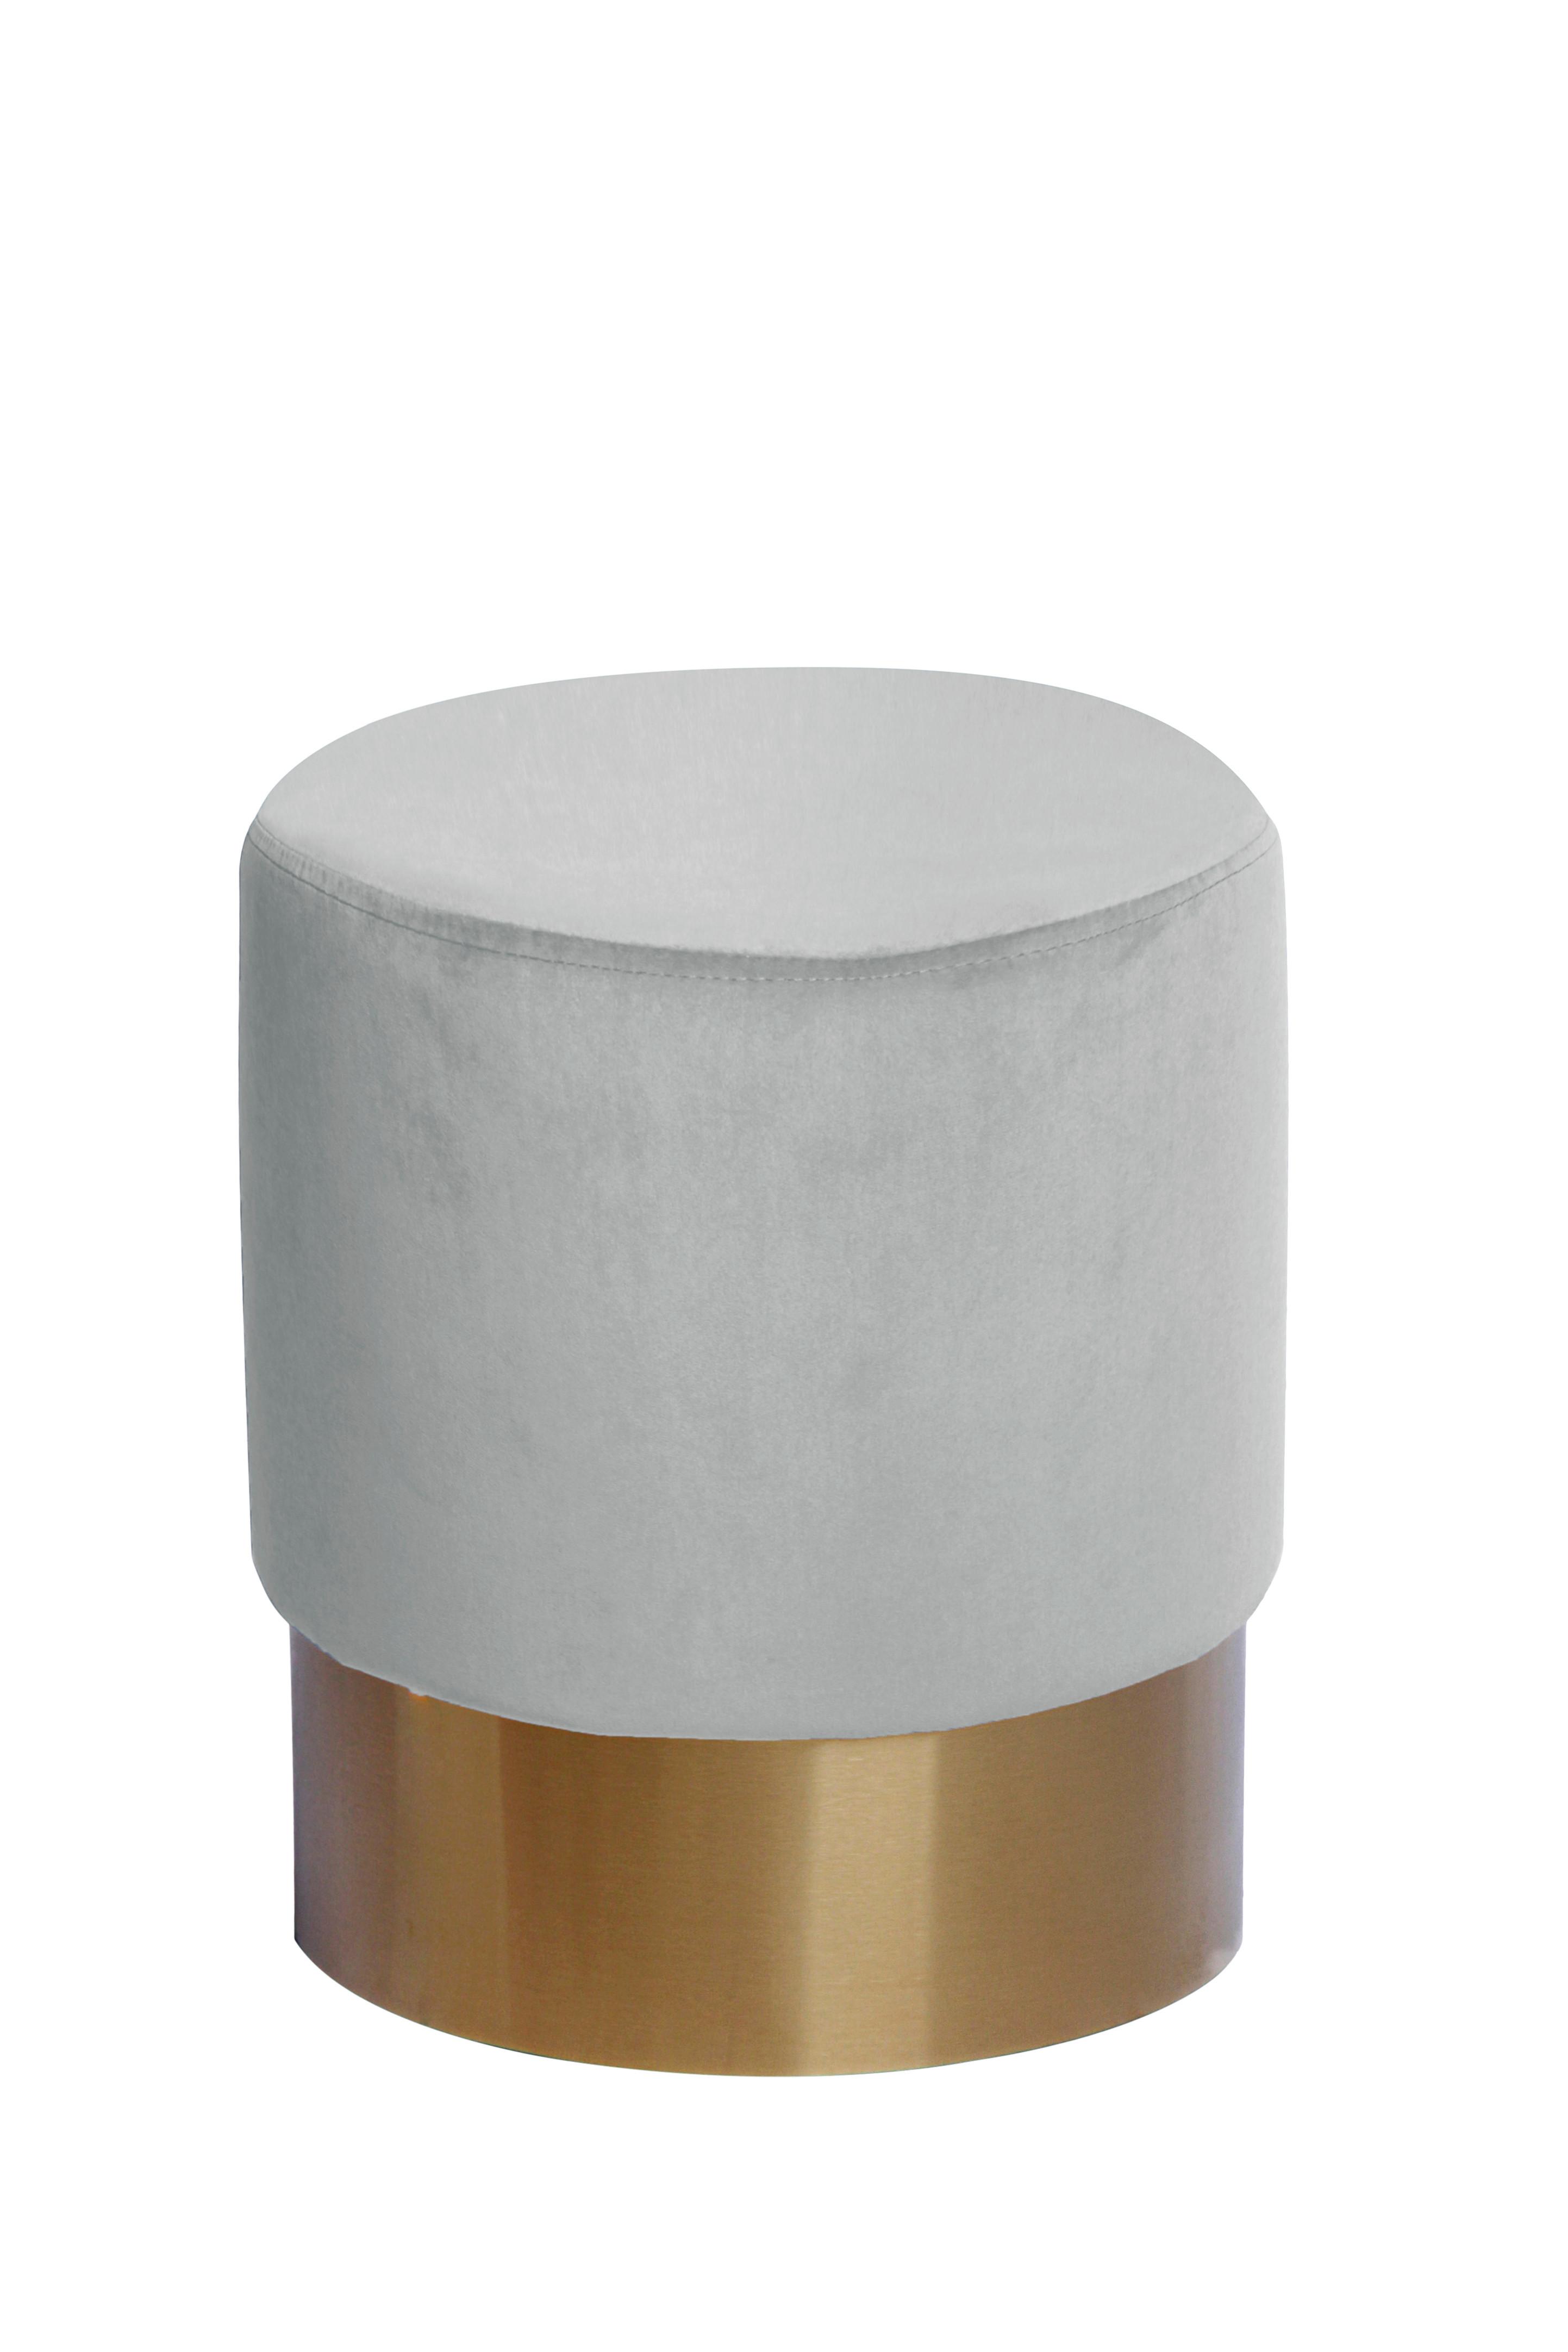 Pouf Nano Samt Weiß/ Mintgrün 35x42 cm - Goldfarben/Weiß, Basics, Holz/Holzwerkstoff (35/42cm)